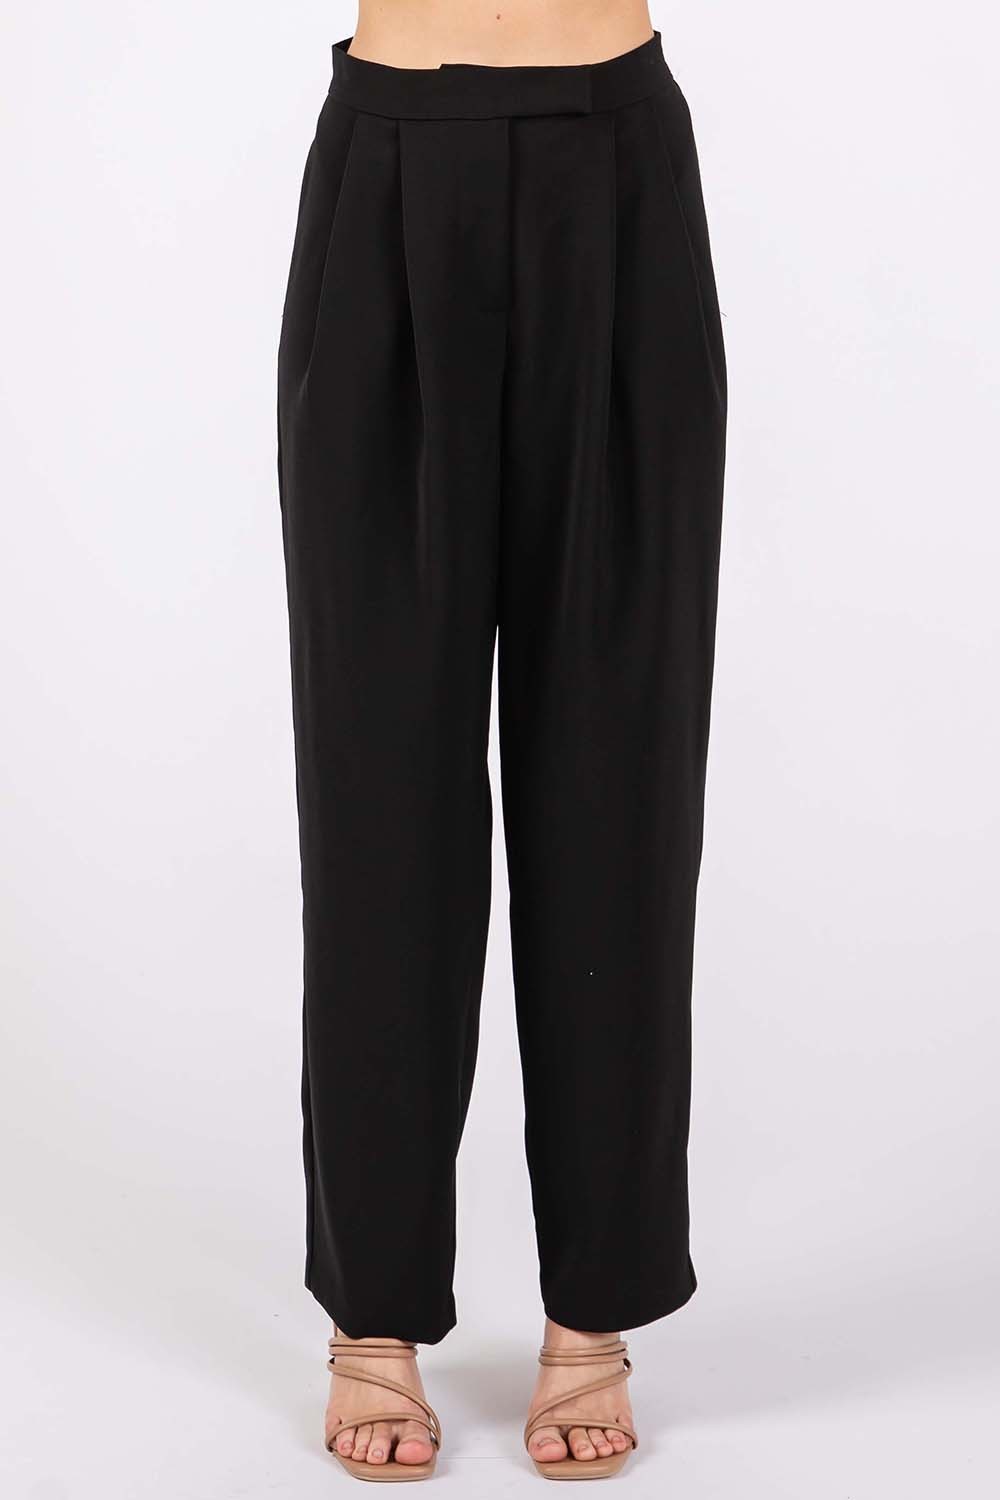 GeeGee High-Waisted Pleated Pants Black Pants